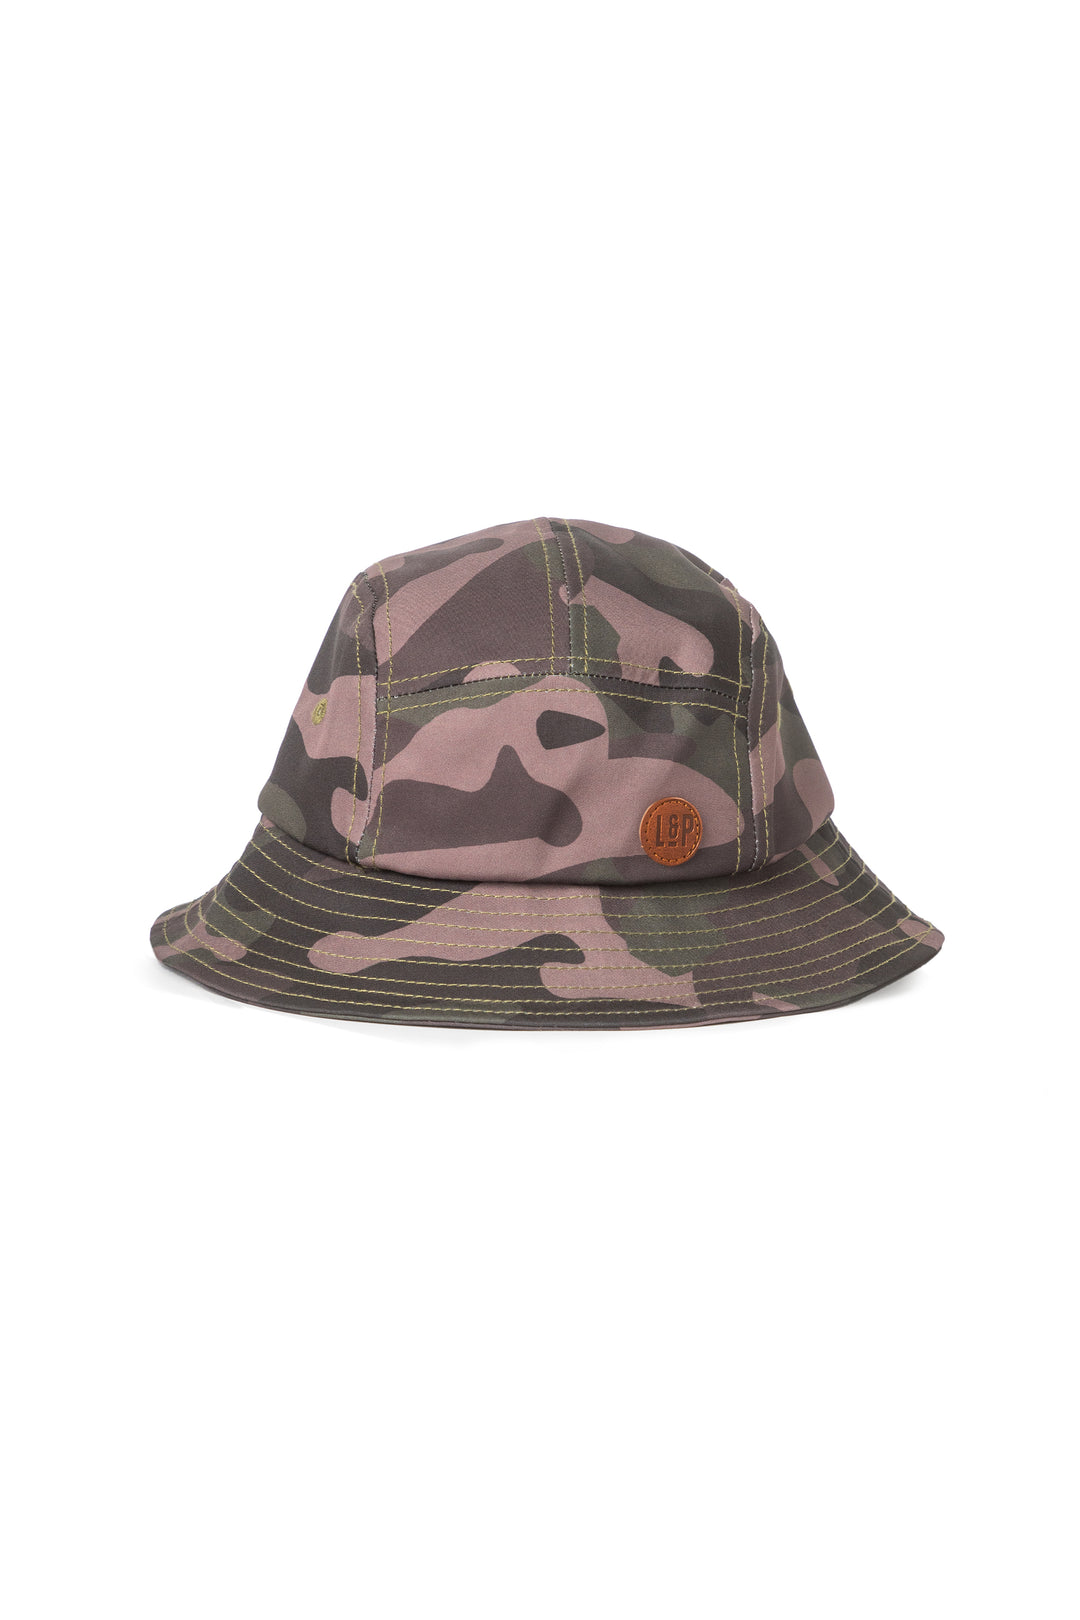 Street Hat [224] [Junior]